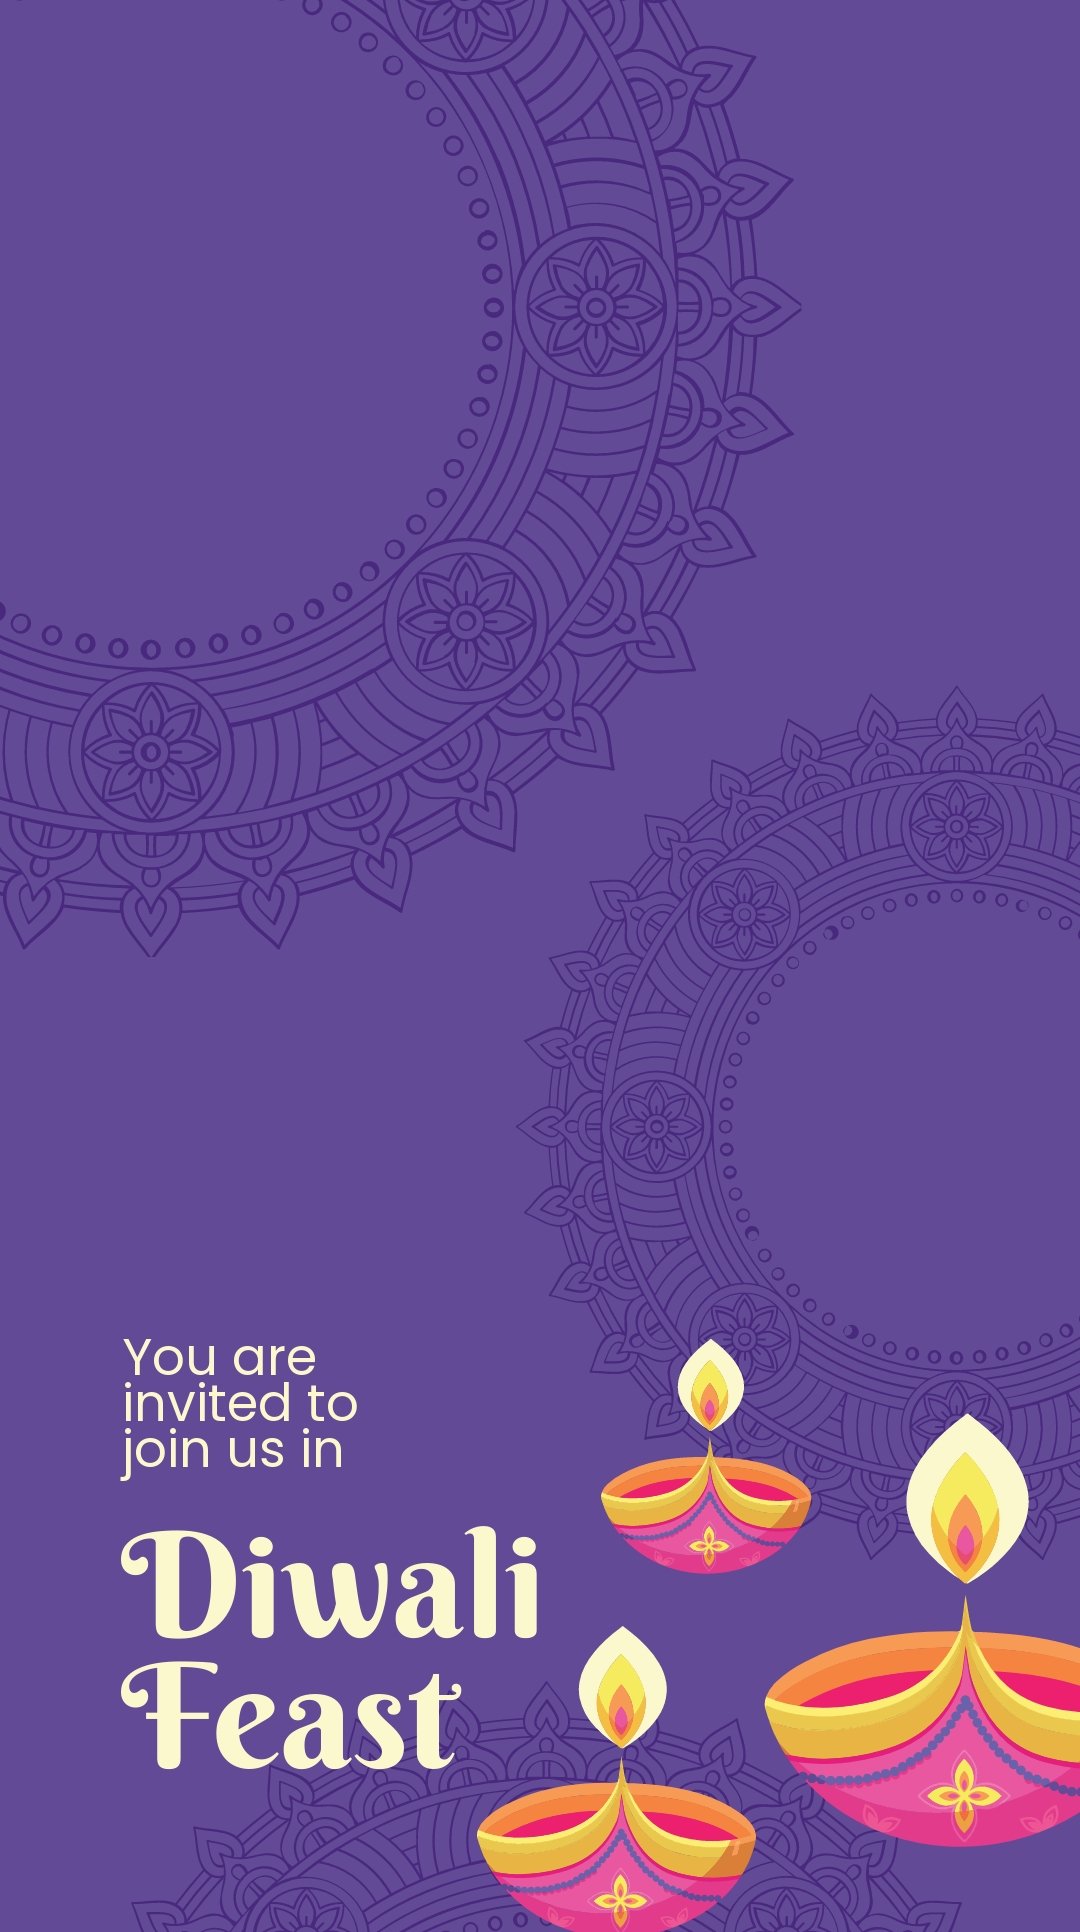 Free Diwali Feast Snapchat Geofilter Template